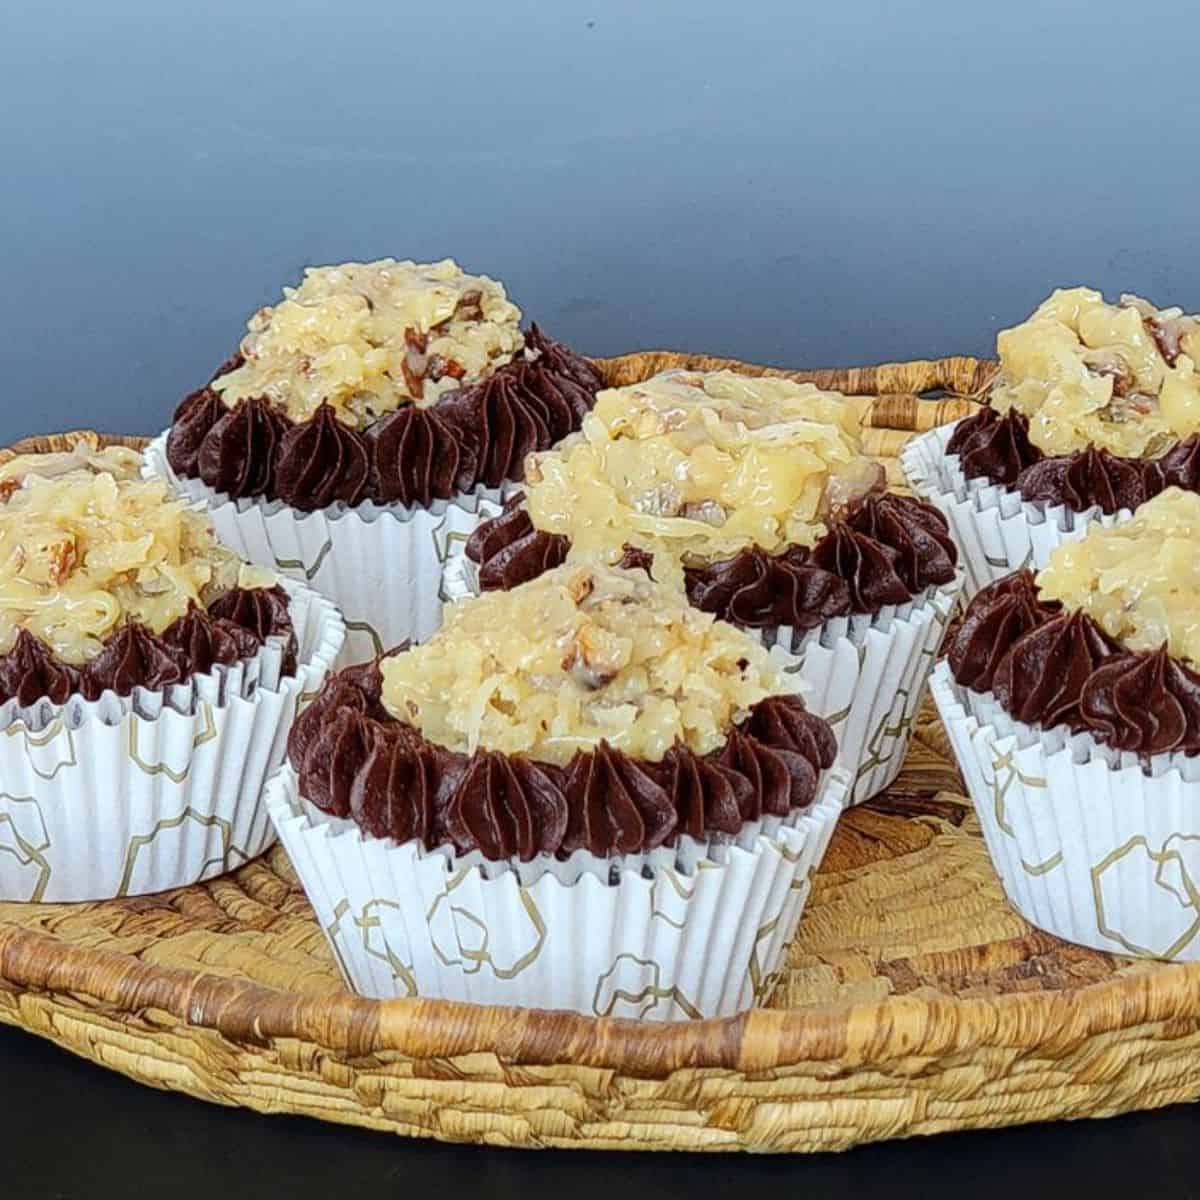 German chocolate cupcakes with fudge icing recipe